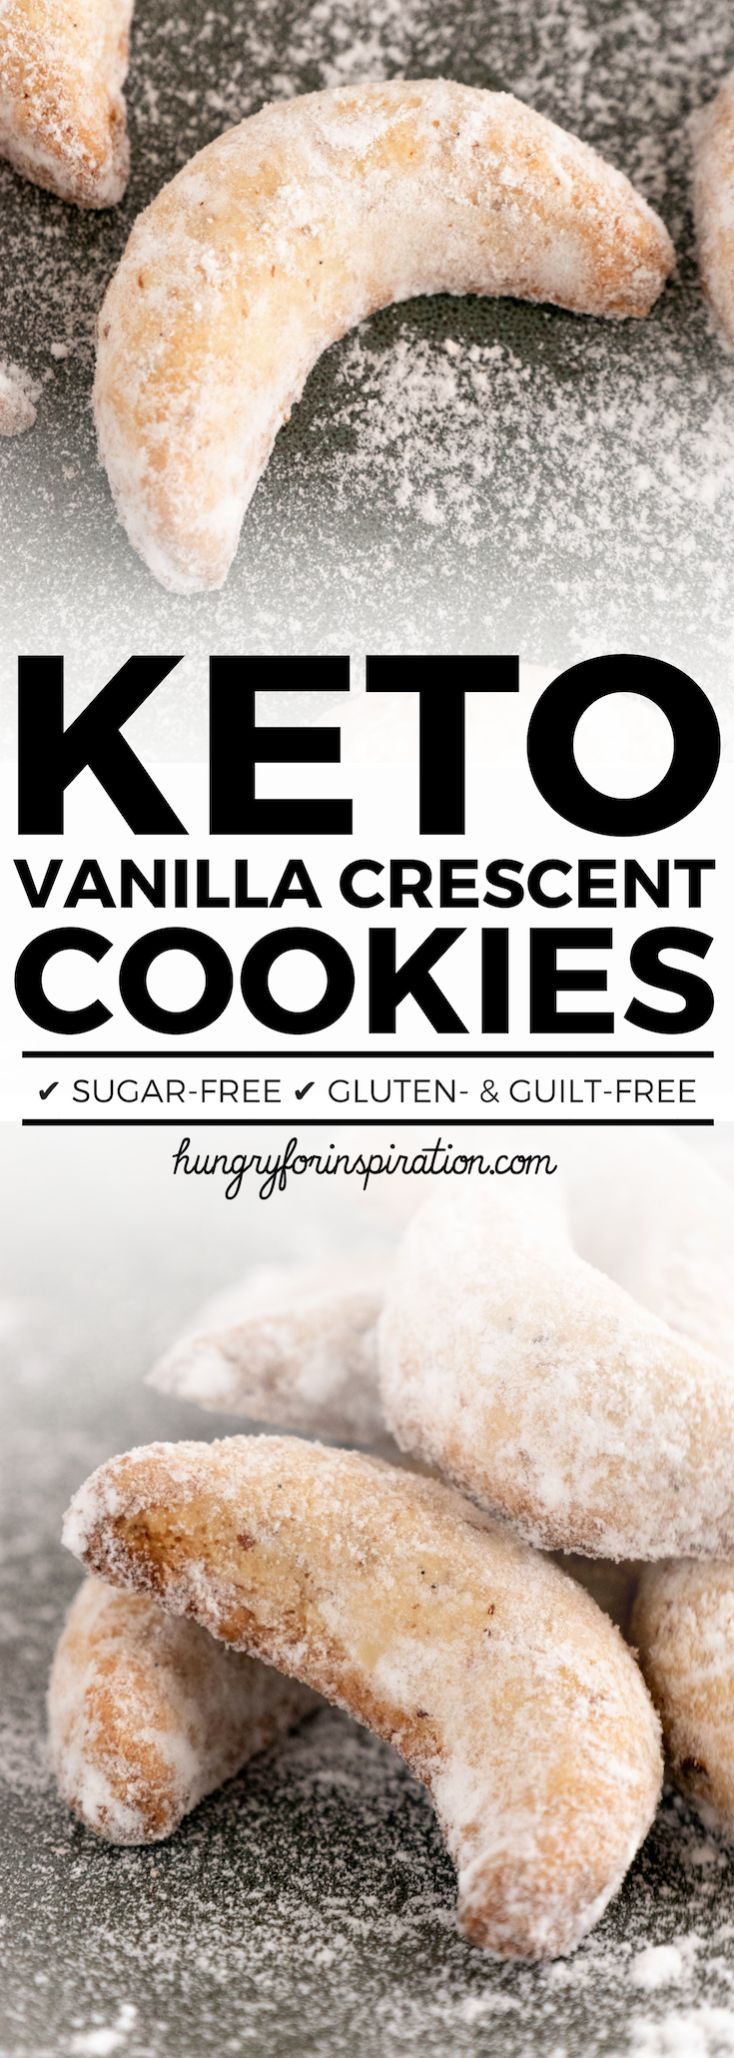 Keto Vanilla Crescent Cookies (Keto Christmas Cookies, Keto Cookies, Keto Treats, Low Carb)